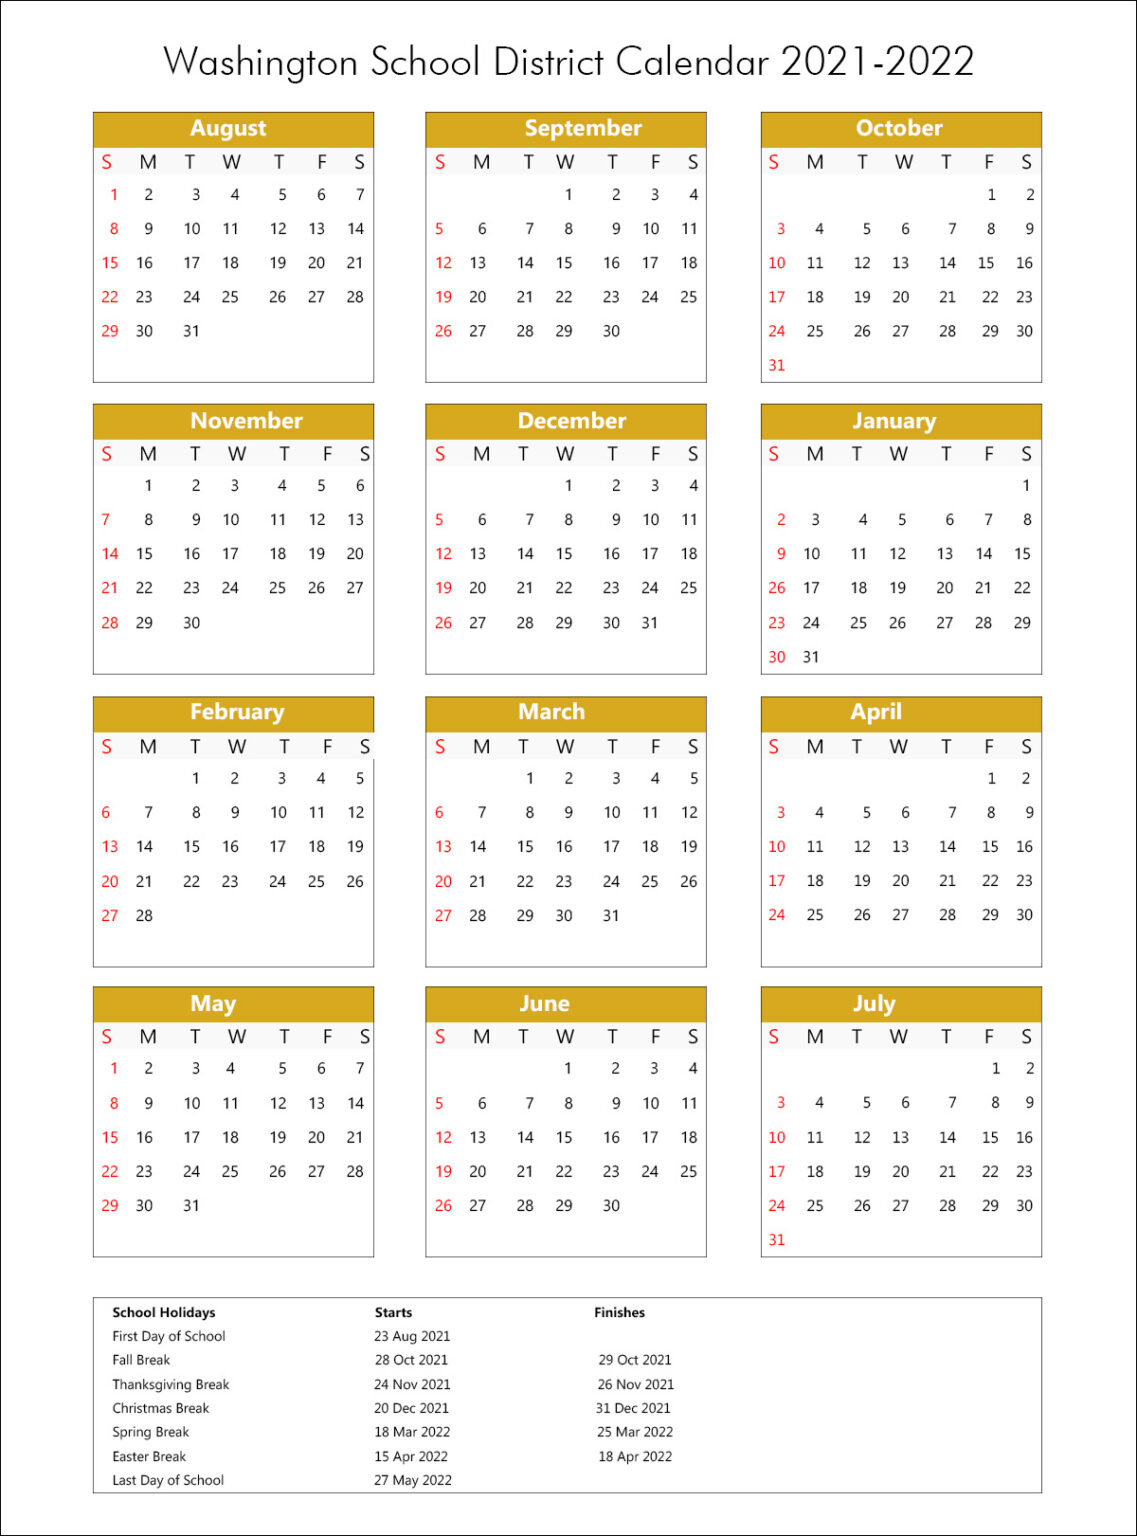 Washington School District Calendar Holidays 2021-2022